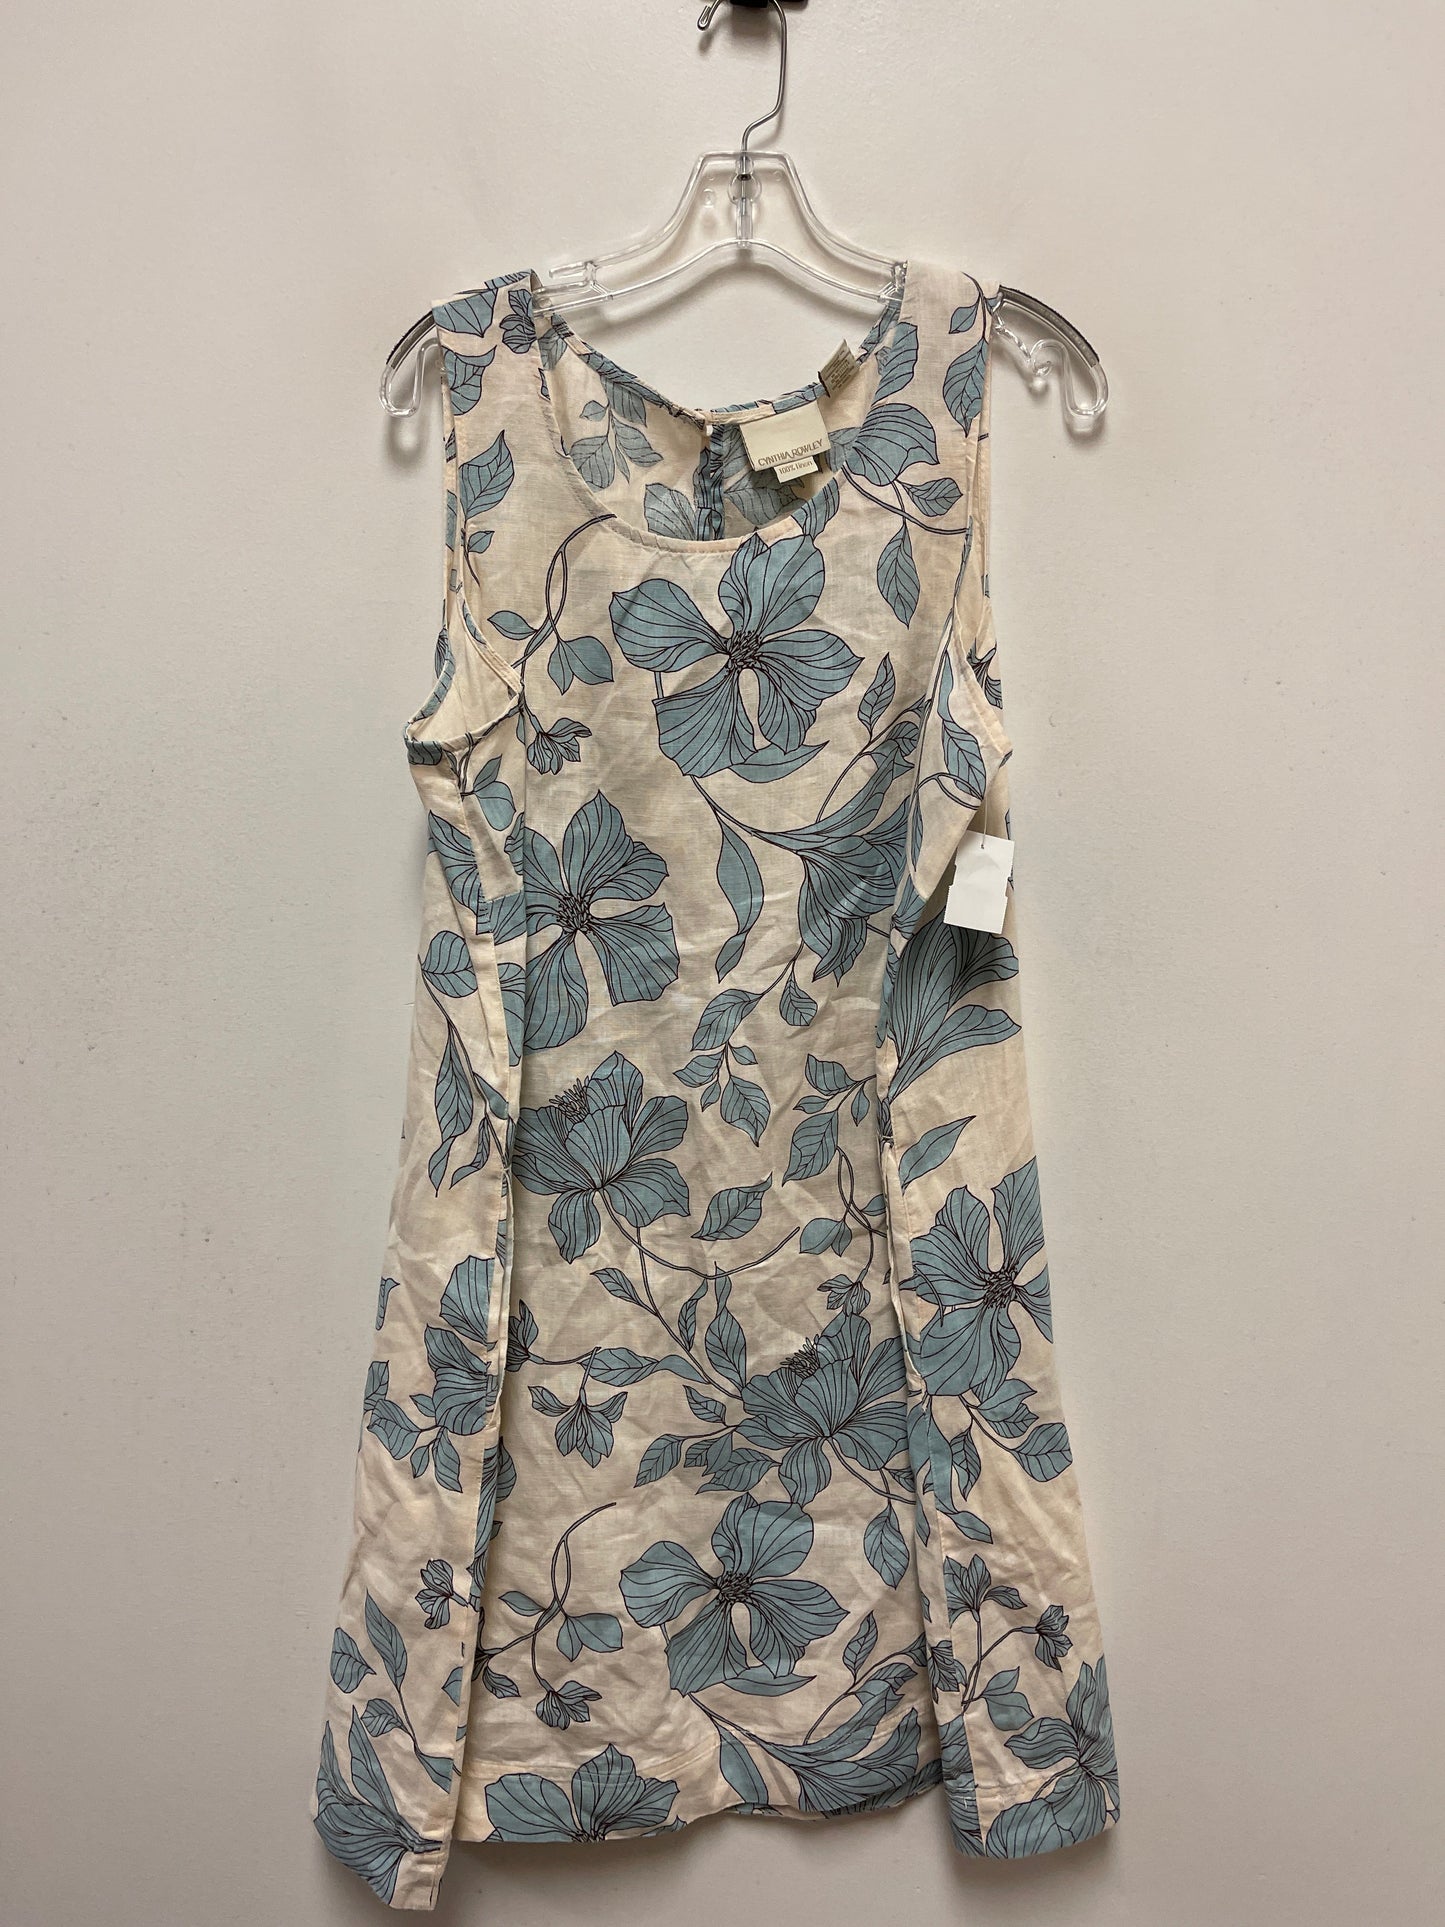 Floral Print Dress Casual Maxi Cynthia Rowley, Size 1x